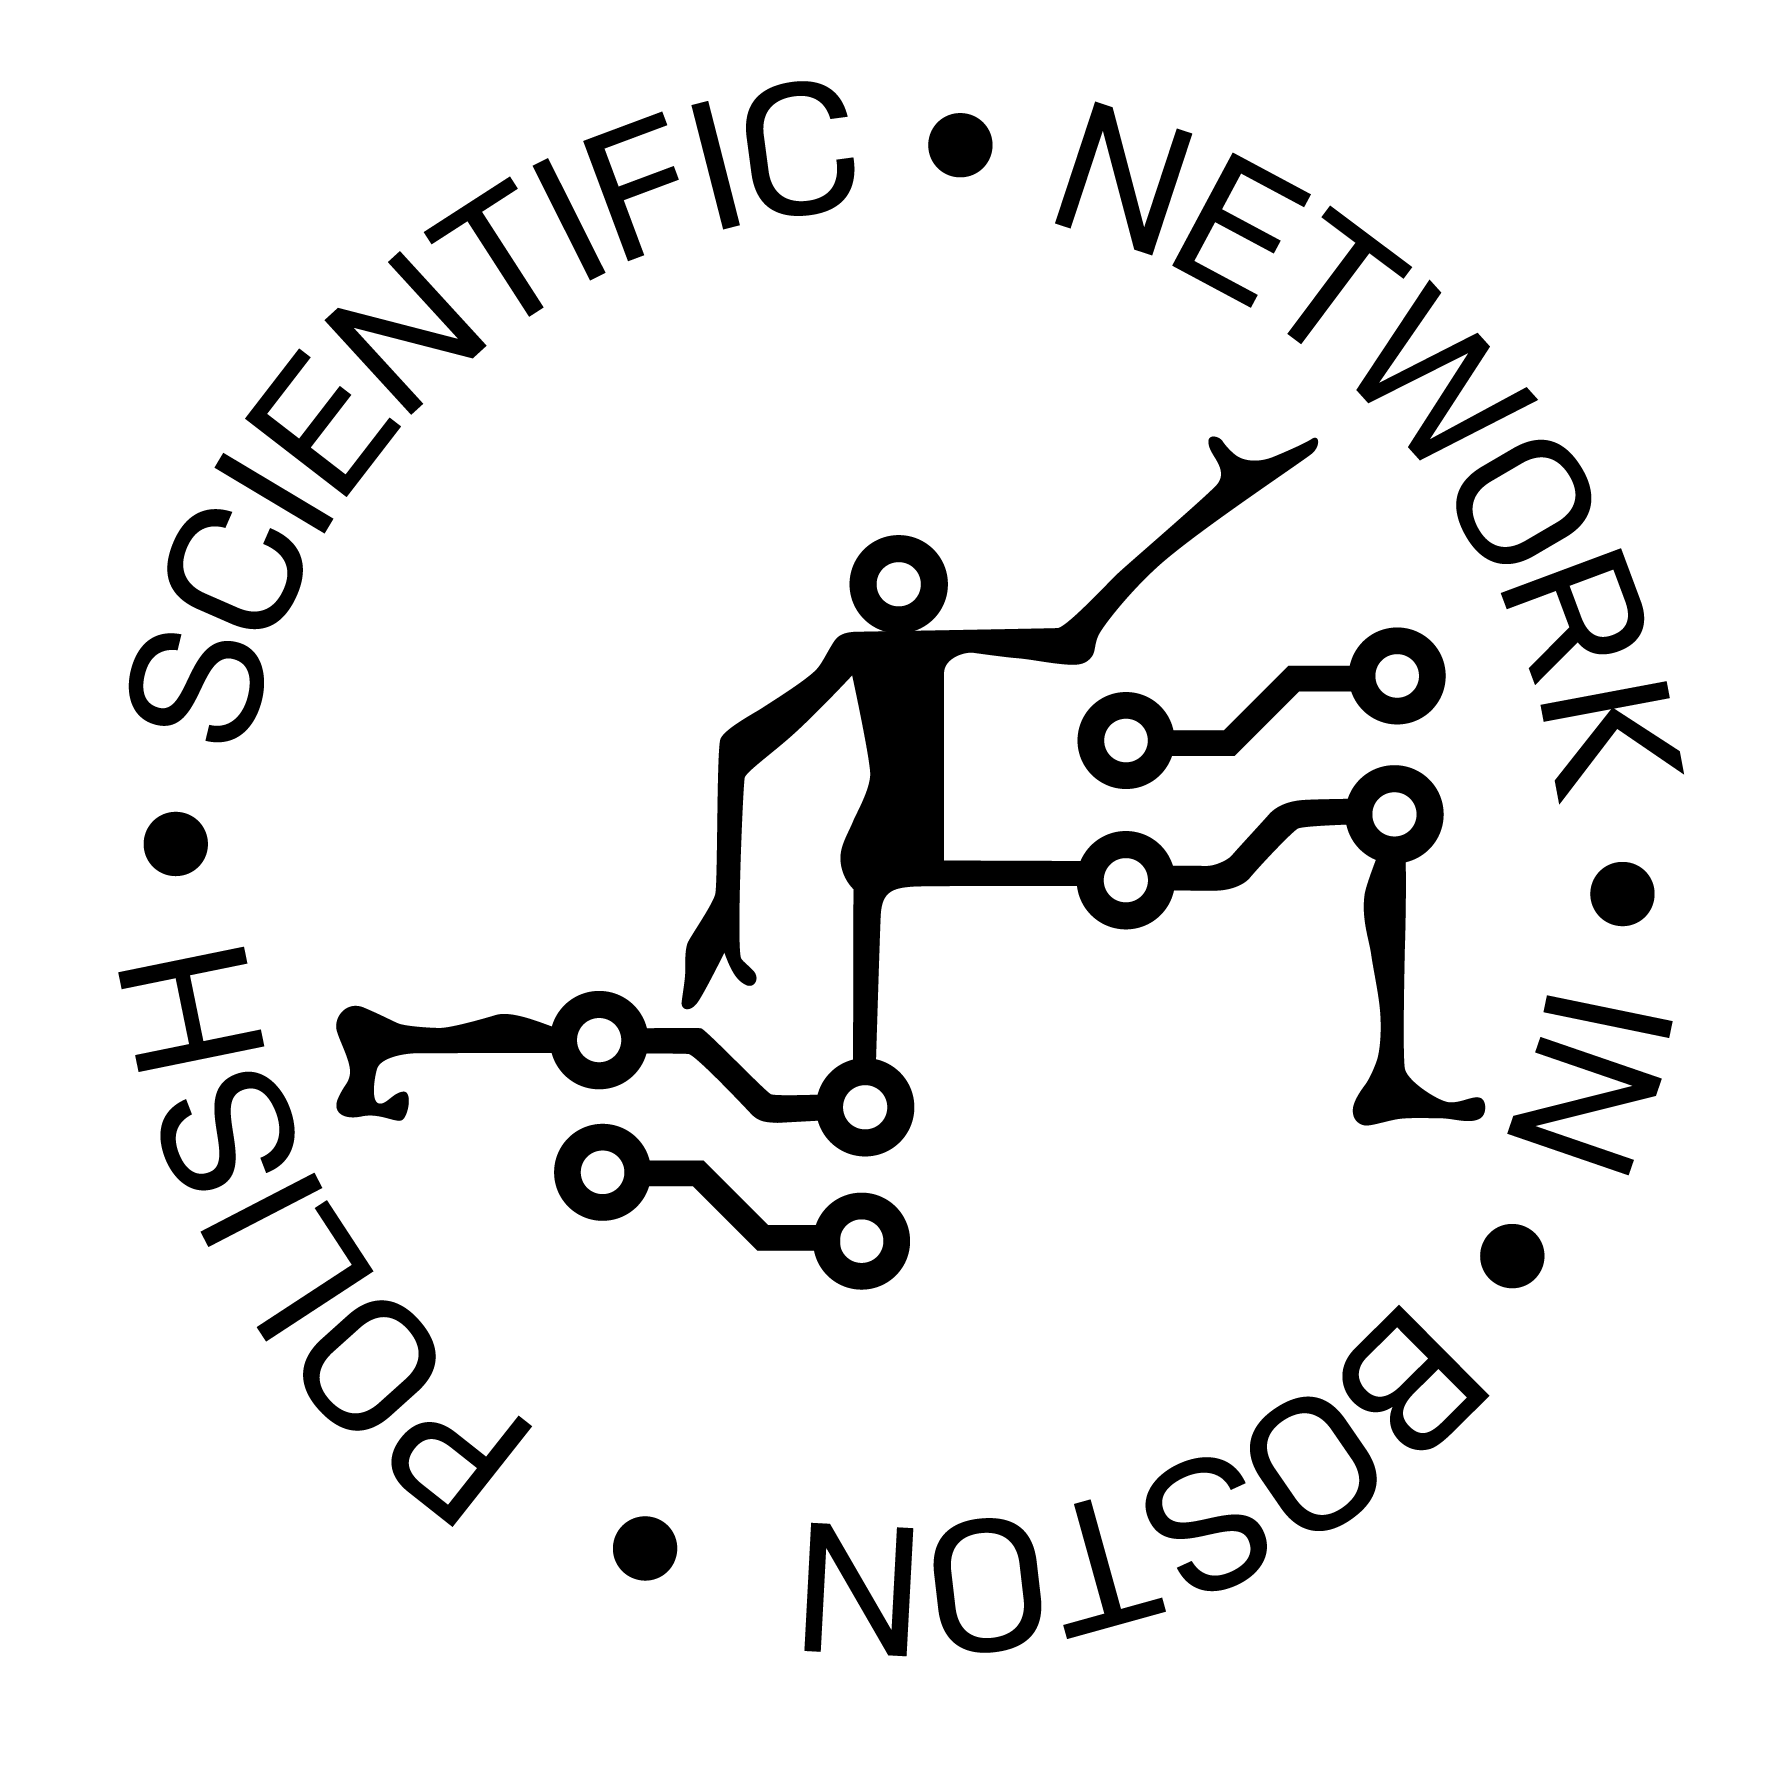 polish_scientific_network_rev-03.png